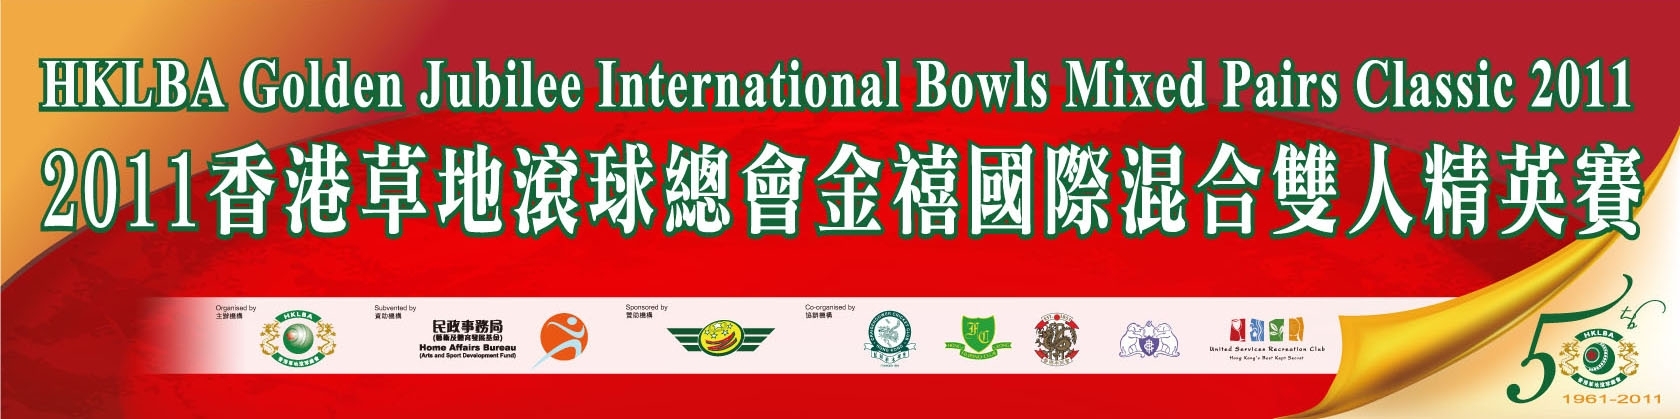 Hong Kong International Bowls Classic 2011 (updated on 22/11/11)